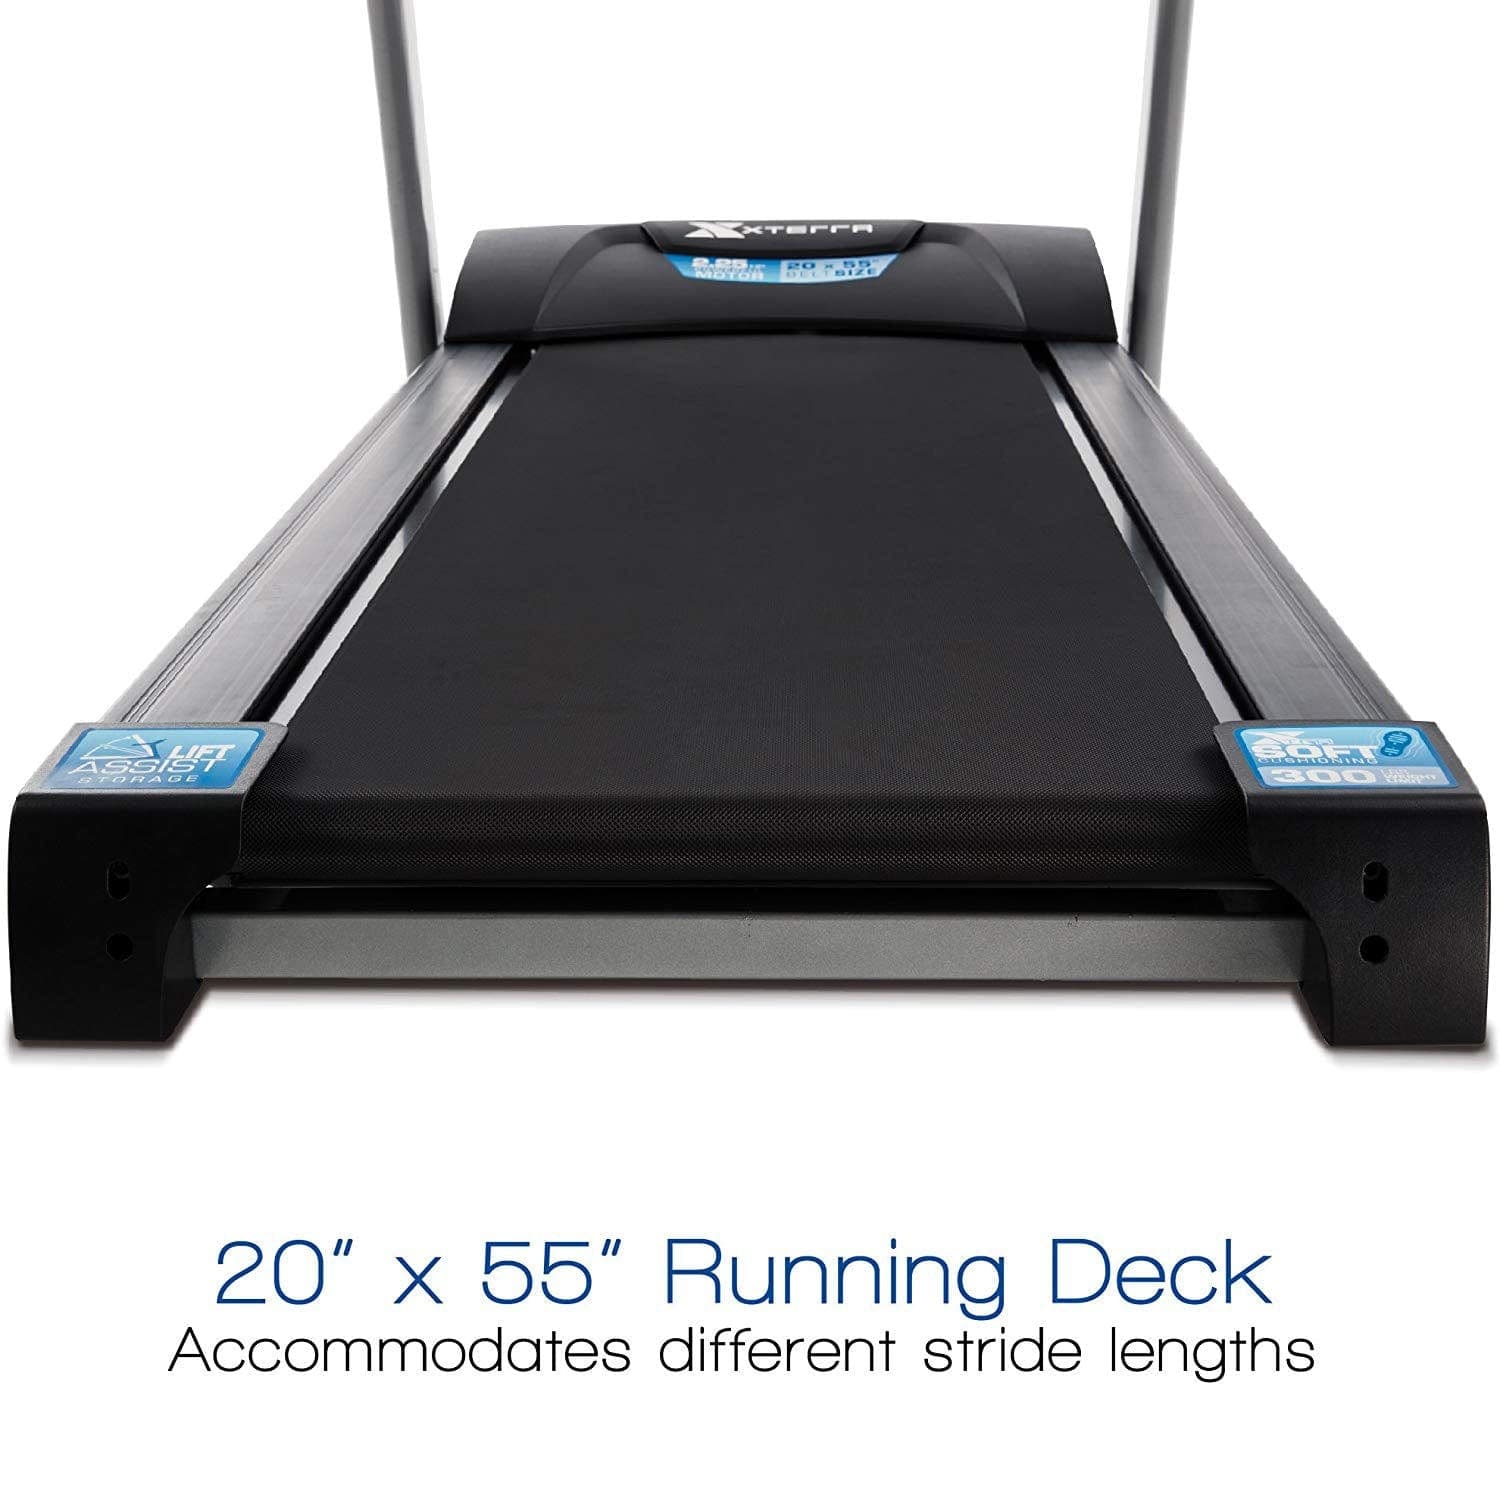 ARGT XTERRA Fitness TRX2500 Home Use Folding Treadmill